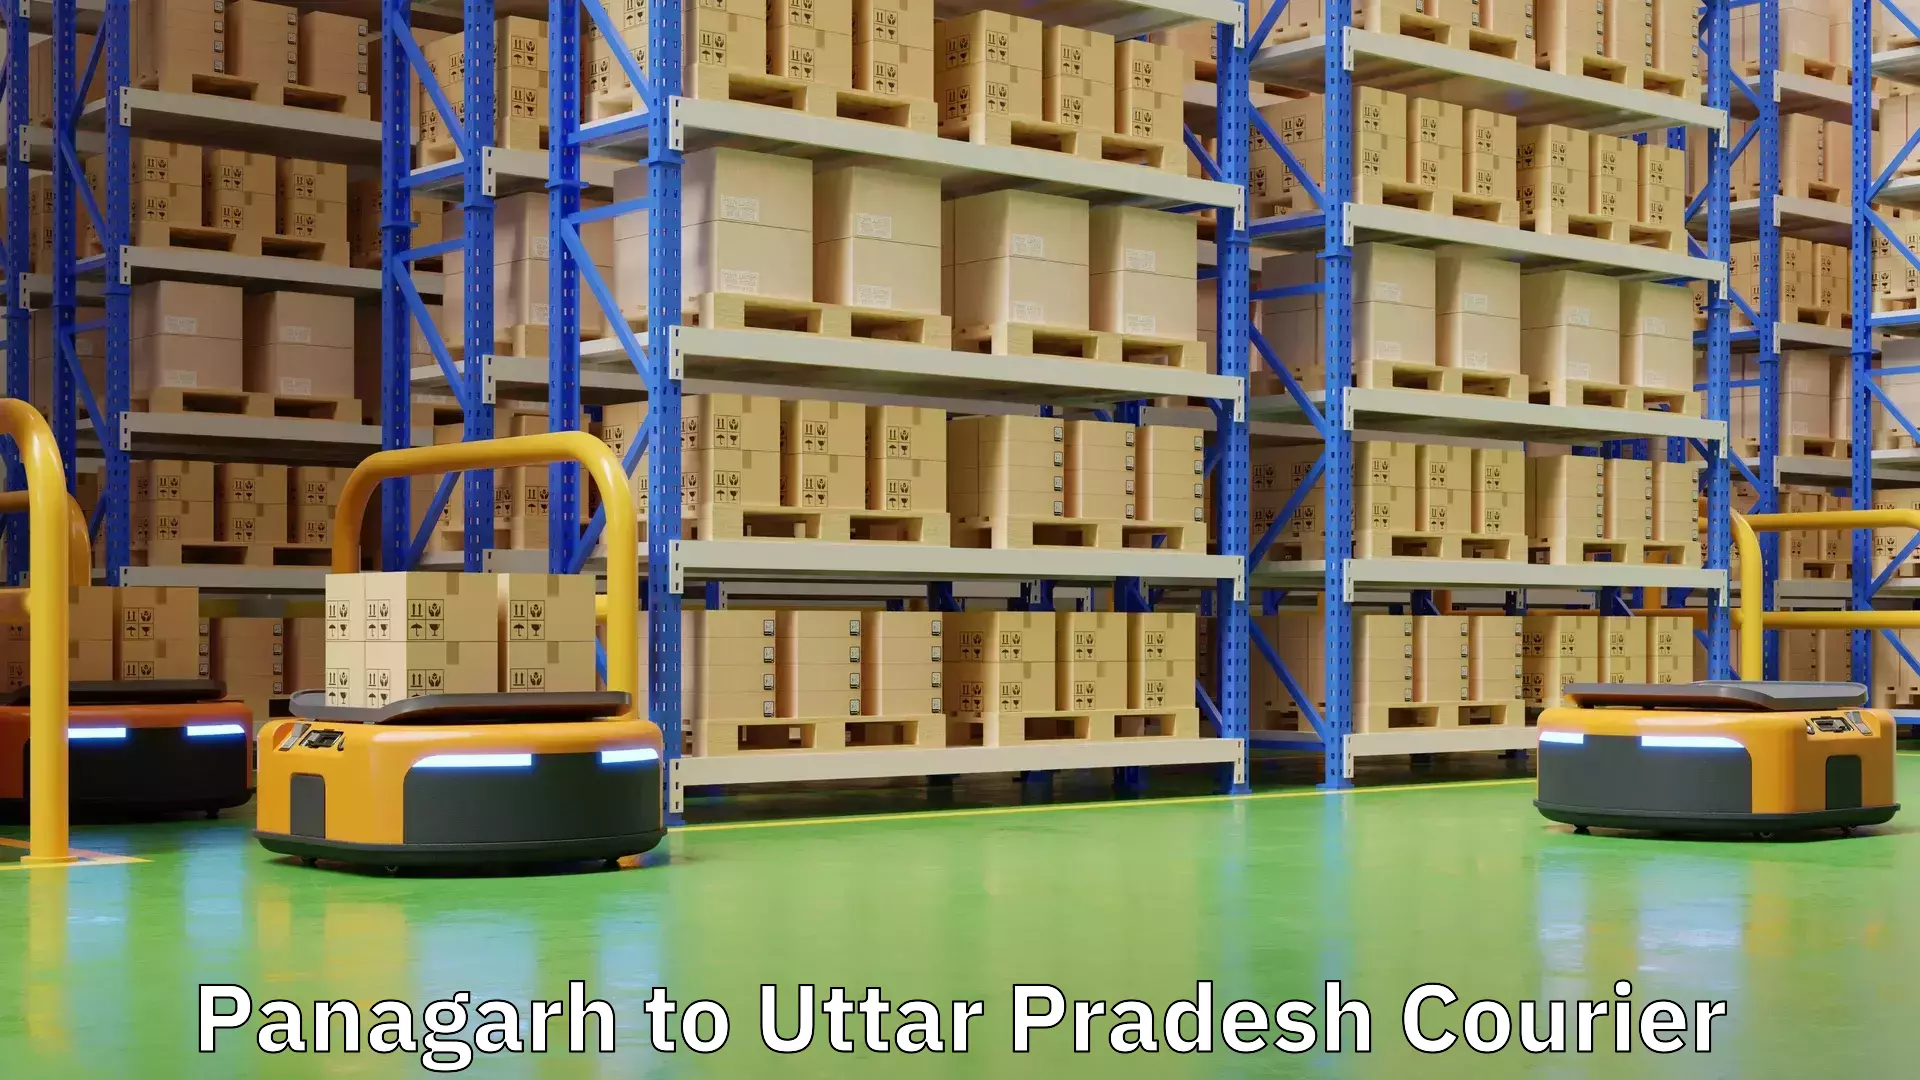 Modern delivery methods Panagarh to Uttar Pradesh